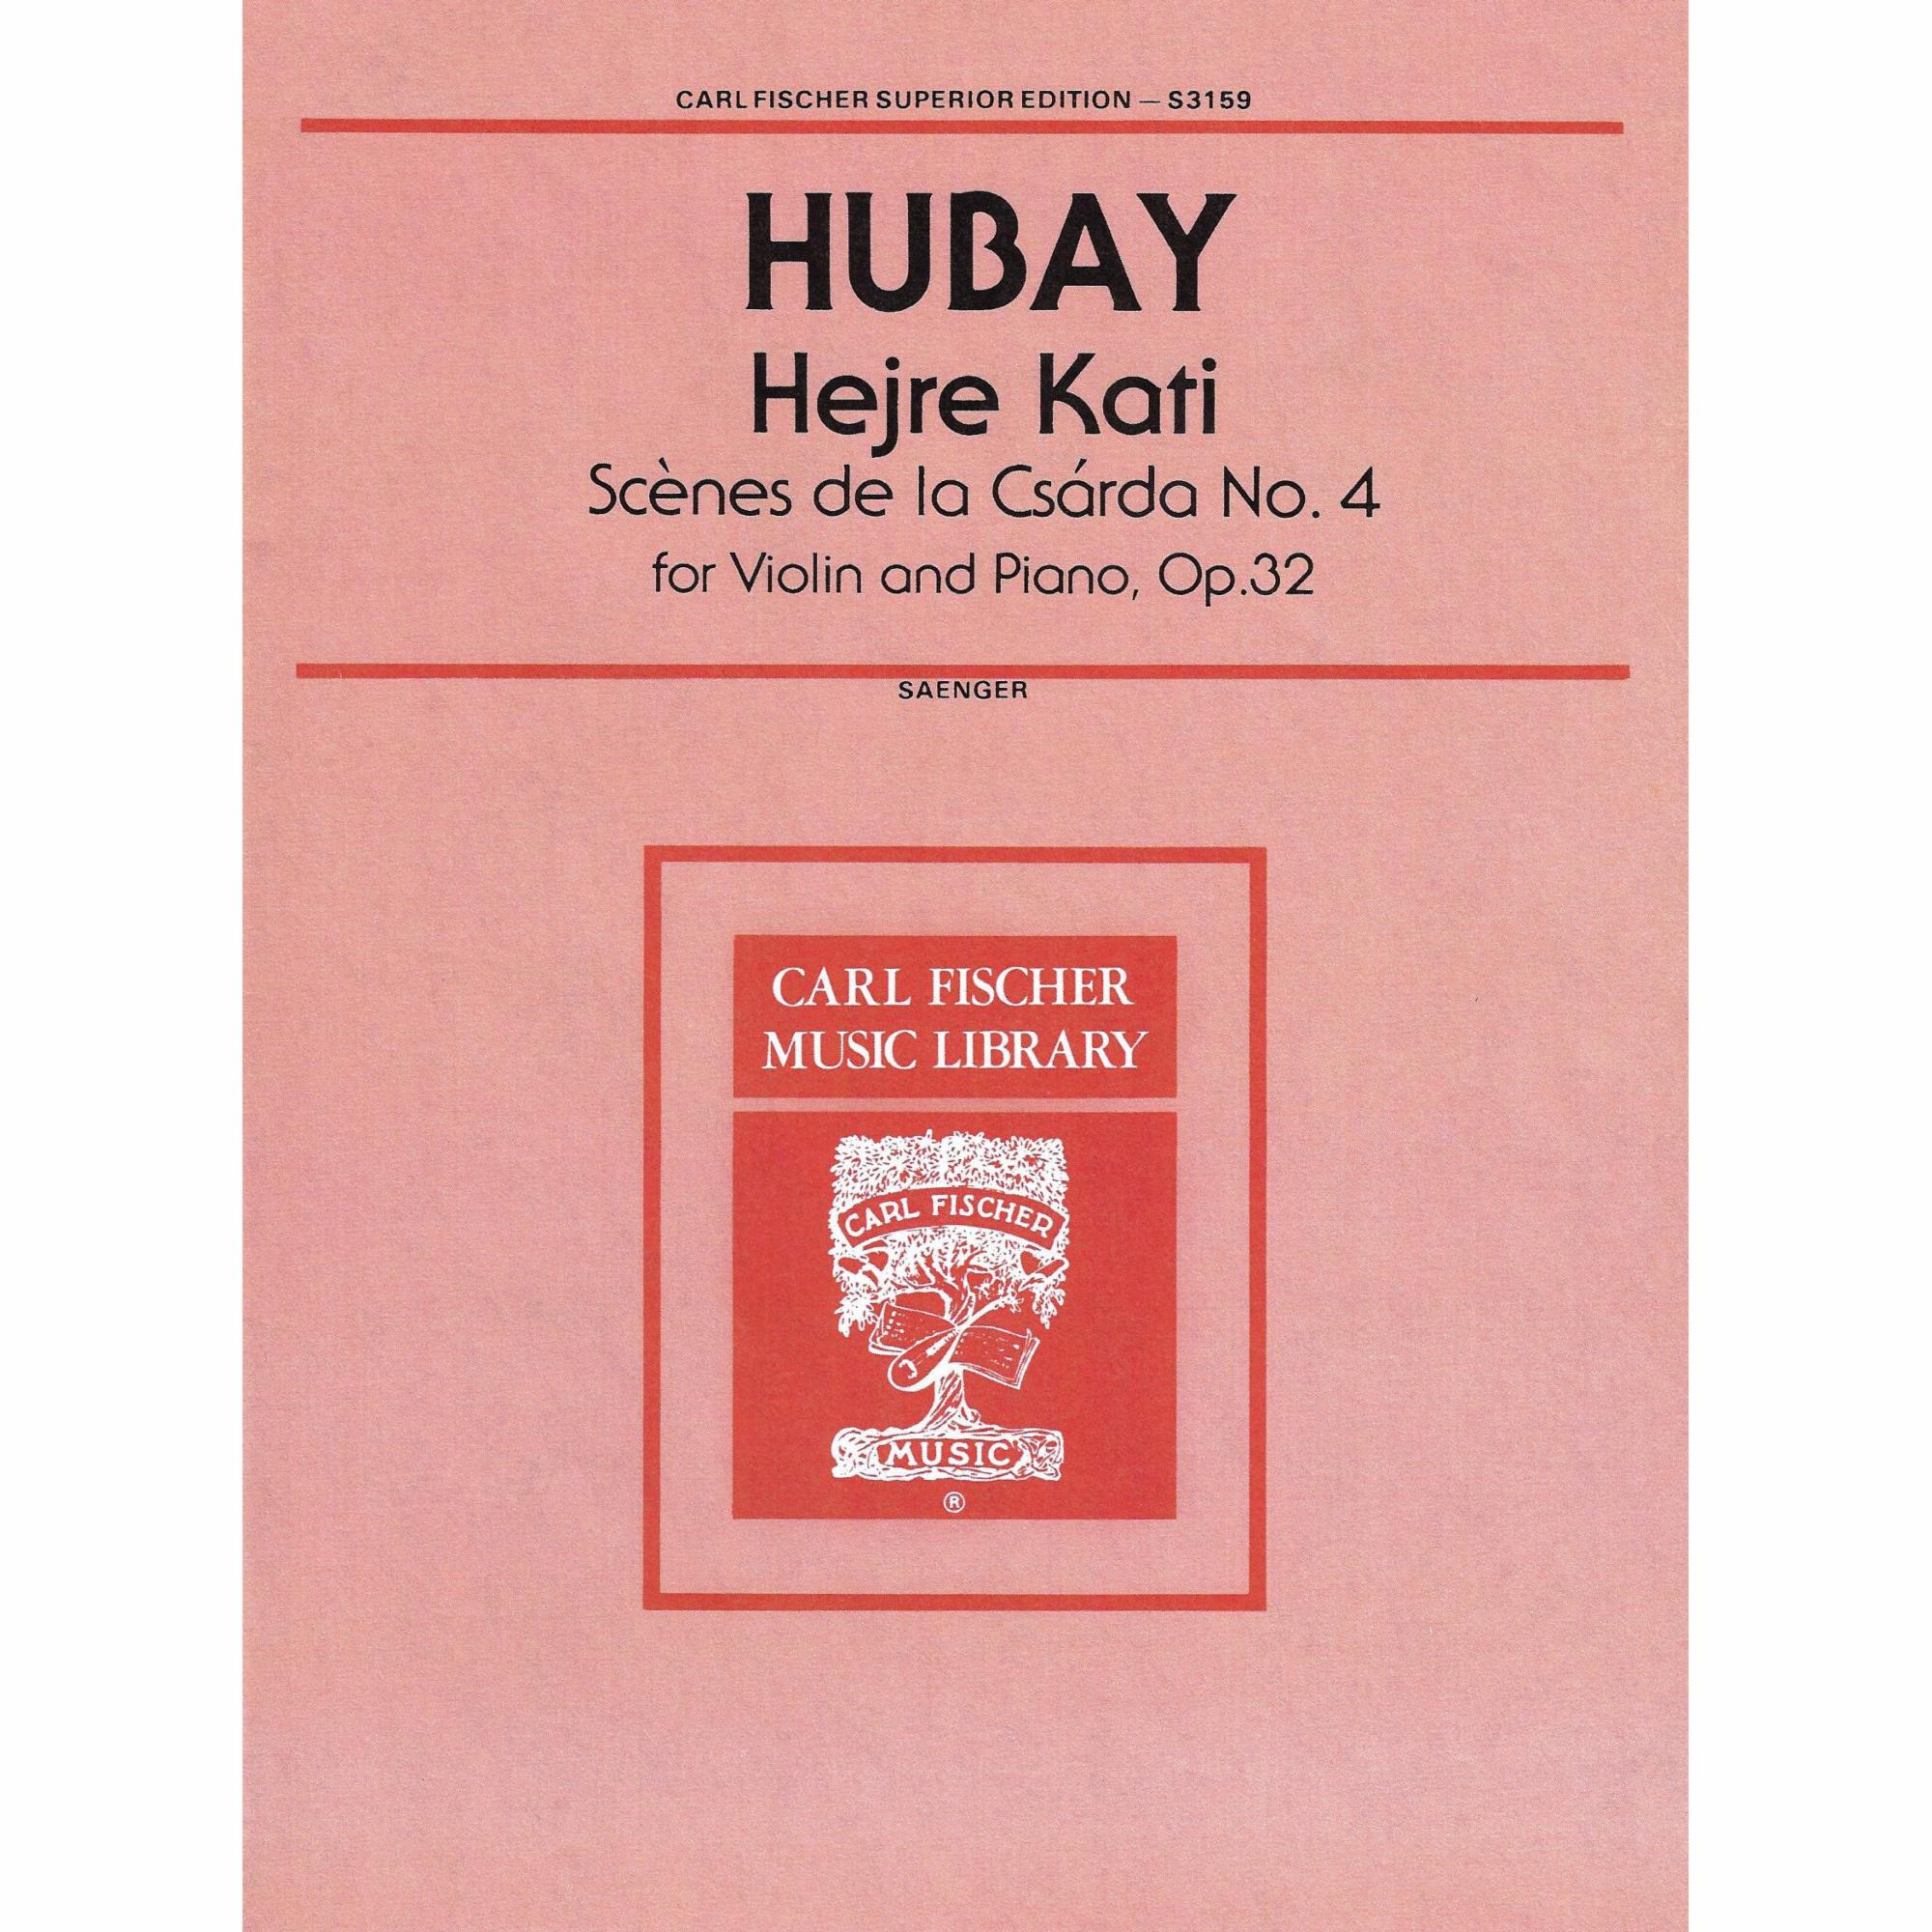 Hubay -- Hejre Kati, Op. 32 for Violin and Piano